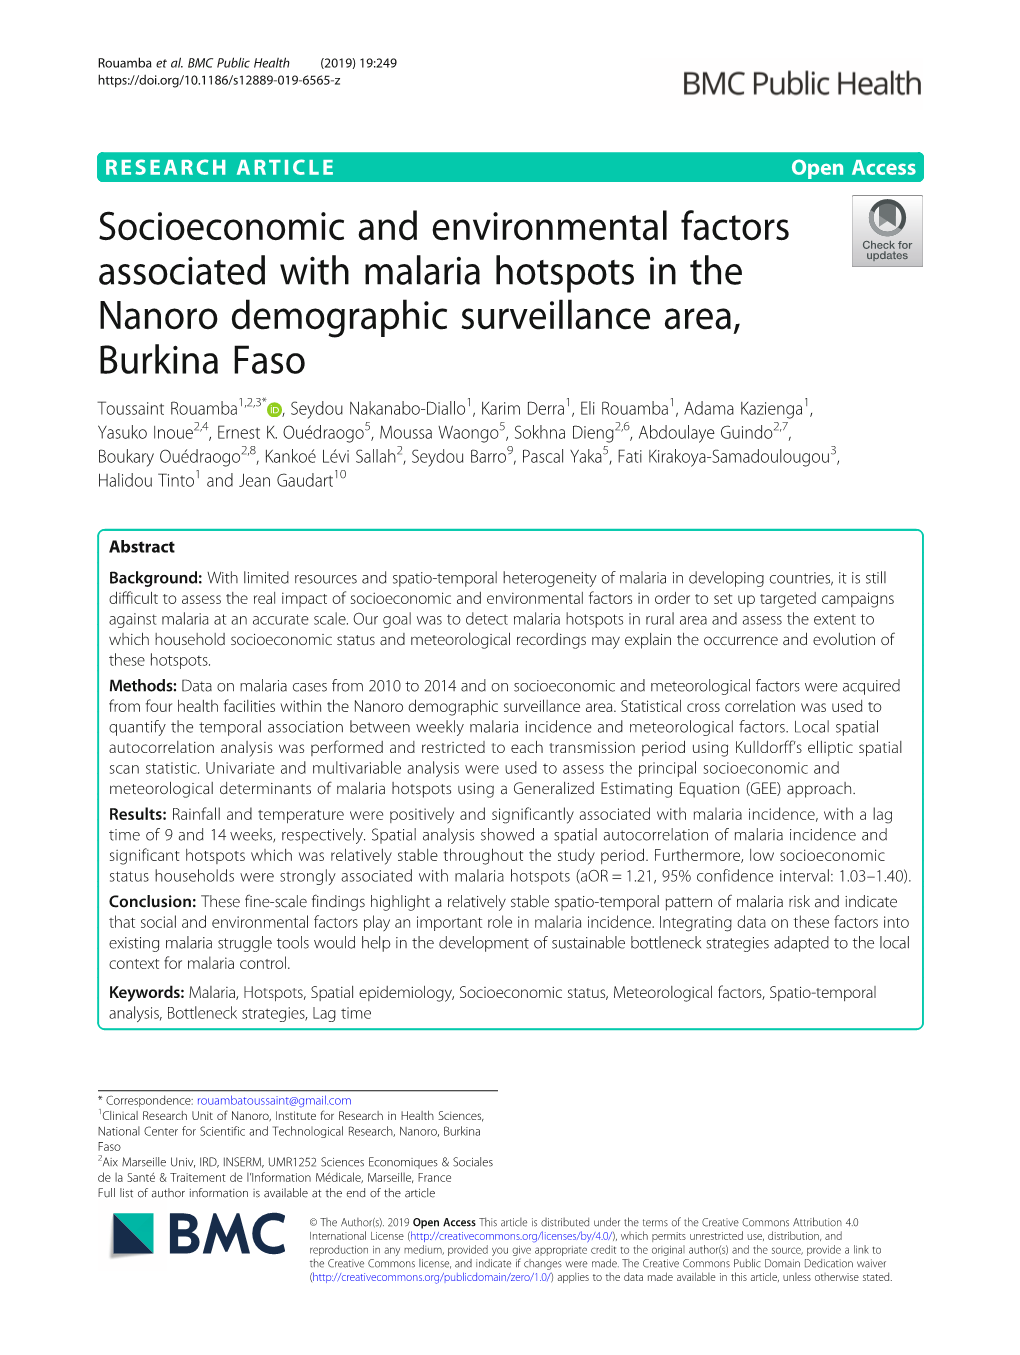 Socioeconomic and Environmental Factors Associated with Malaria